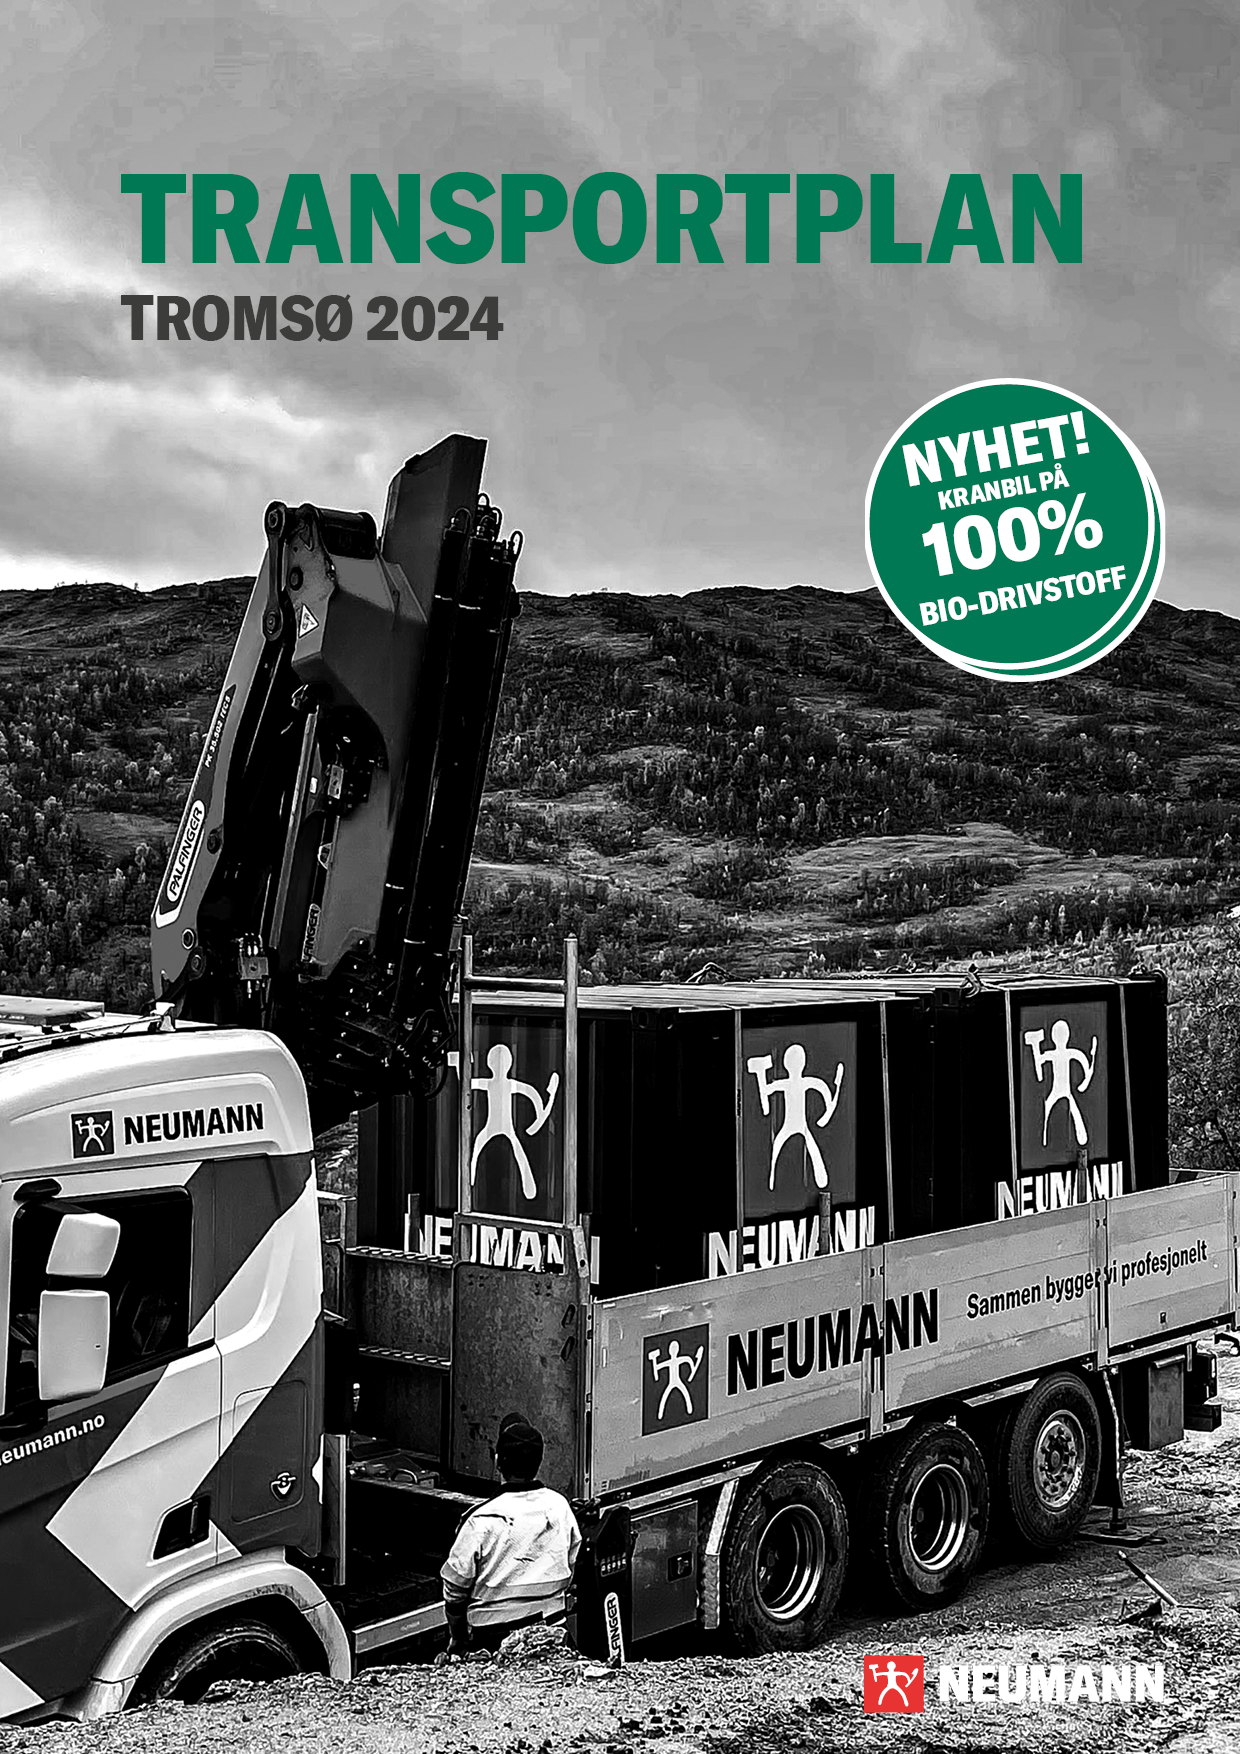 Transportplan 2024 Tromsø